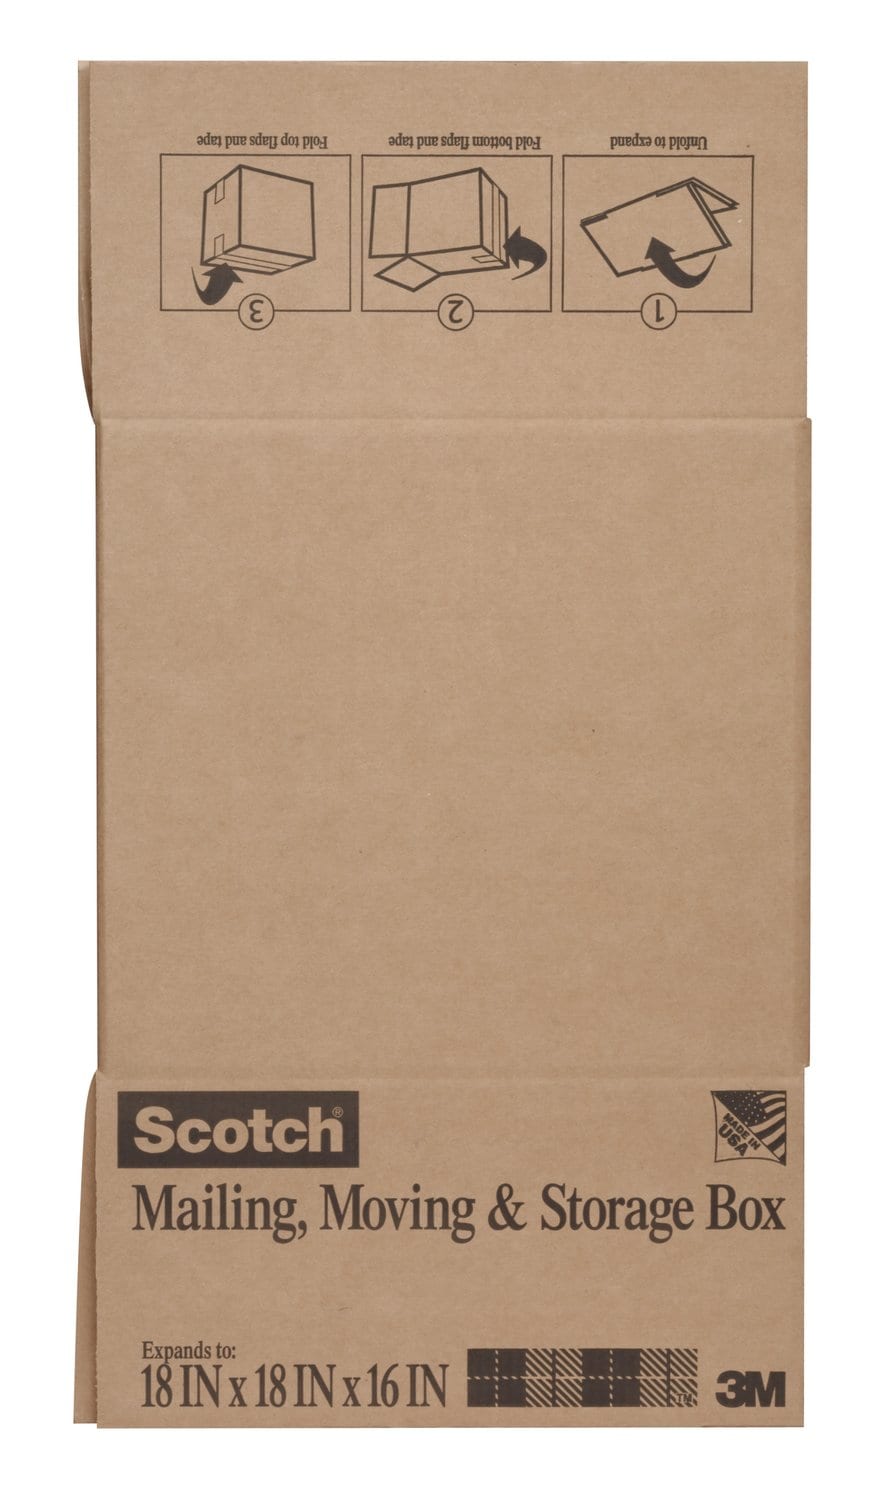 7010341640 - Scotch Folded Box, 8018FBLRG, 18 in x 18 in x 16 in Large Size Folded
Box